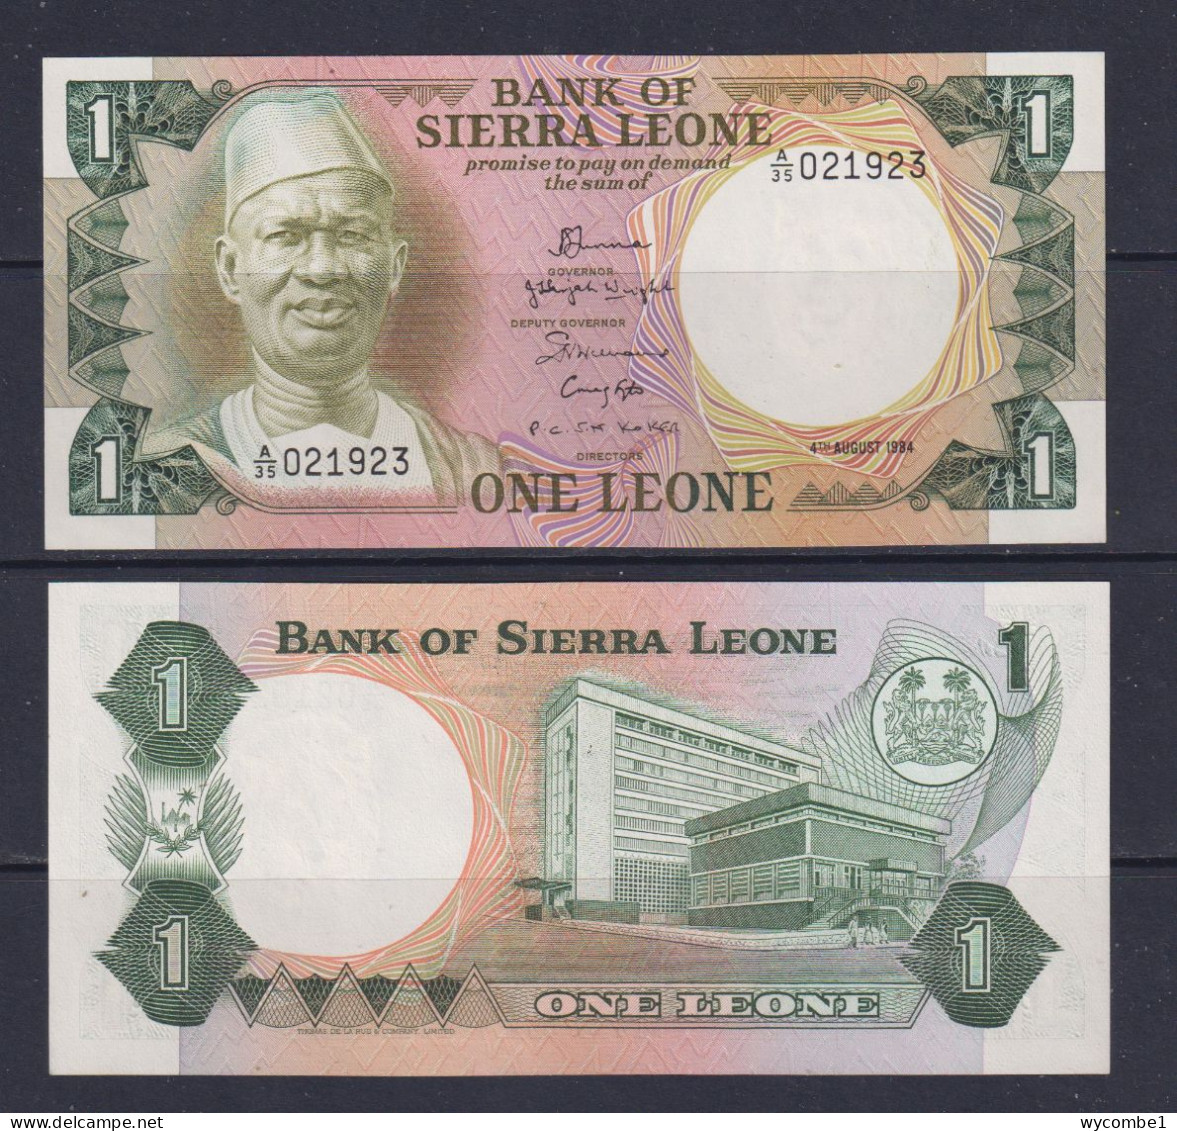 SIERRA LEONE -  1984 1 Leone UNC  Banknote - Sierra Leone